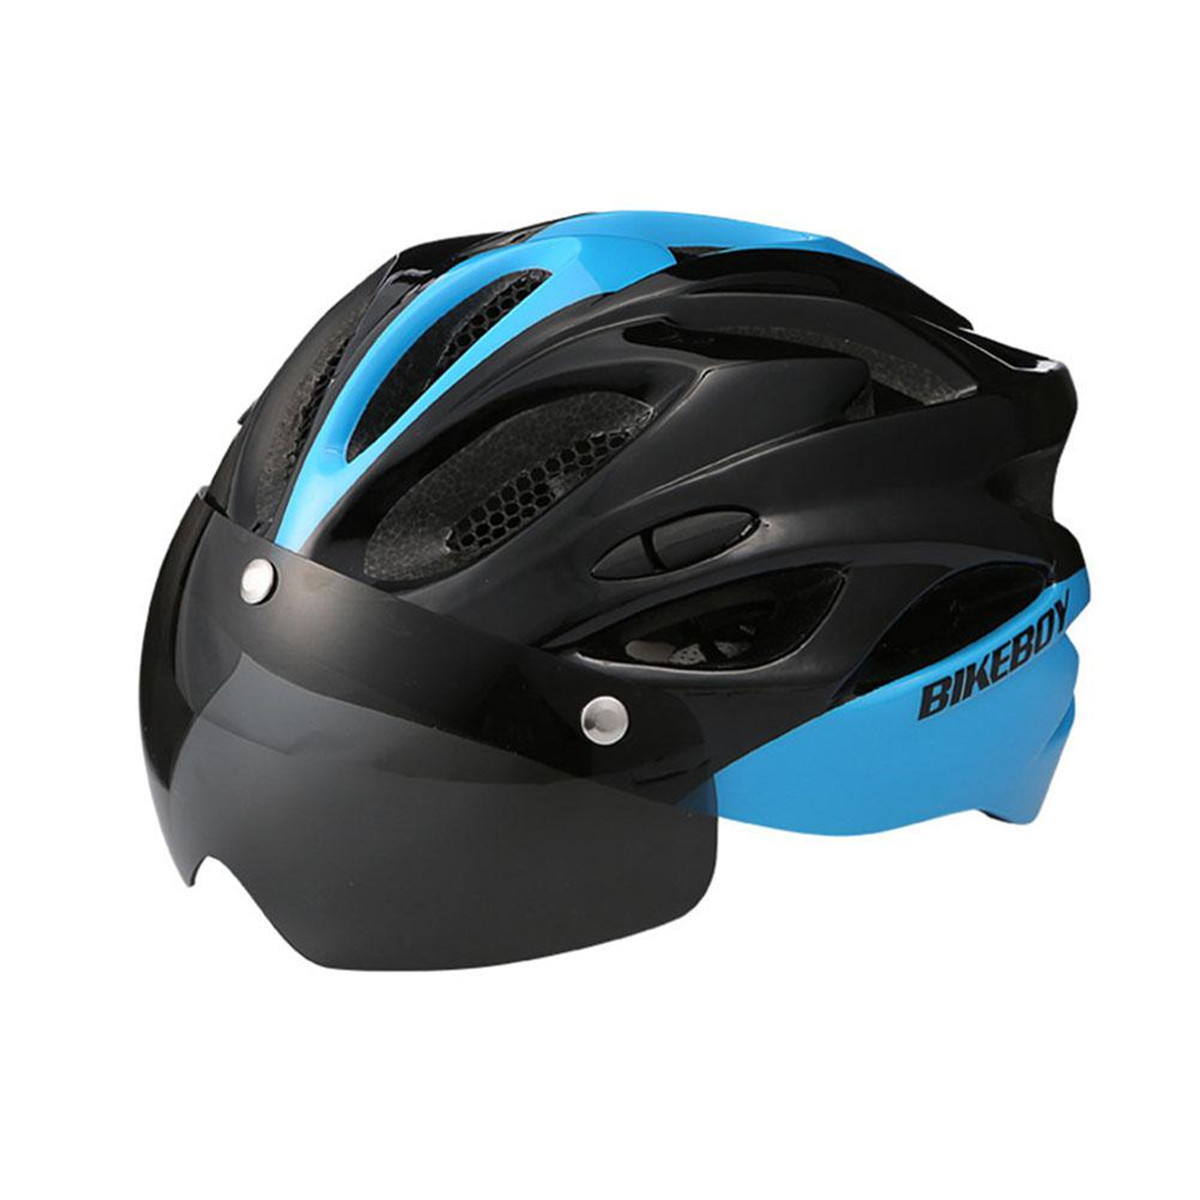 Unisex Adult Cycling Bike Helmet with Detachable Magnetic Visor Lens ...